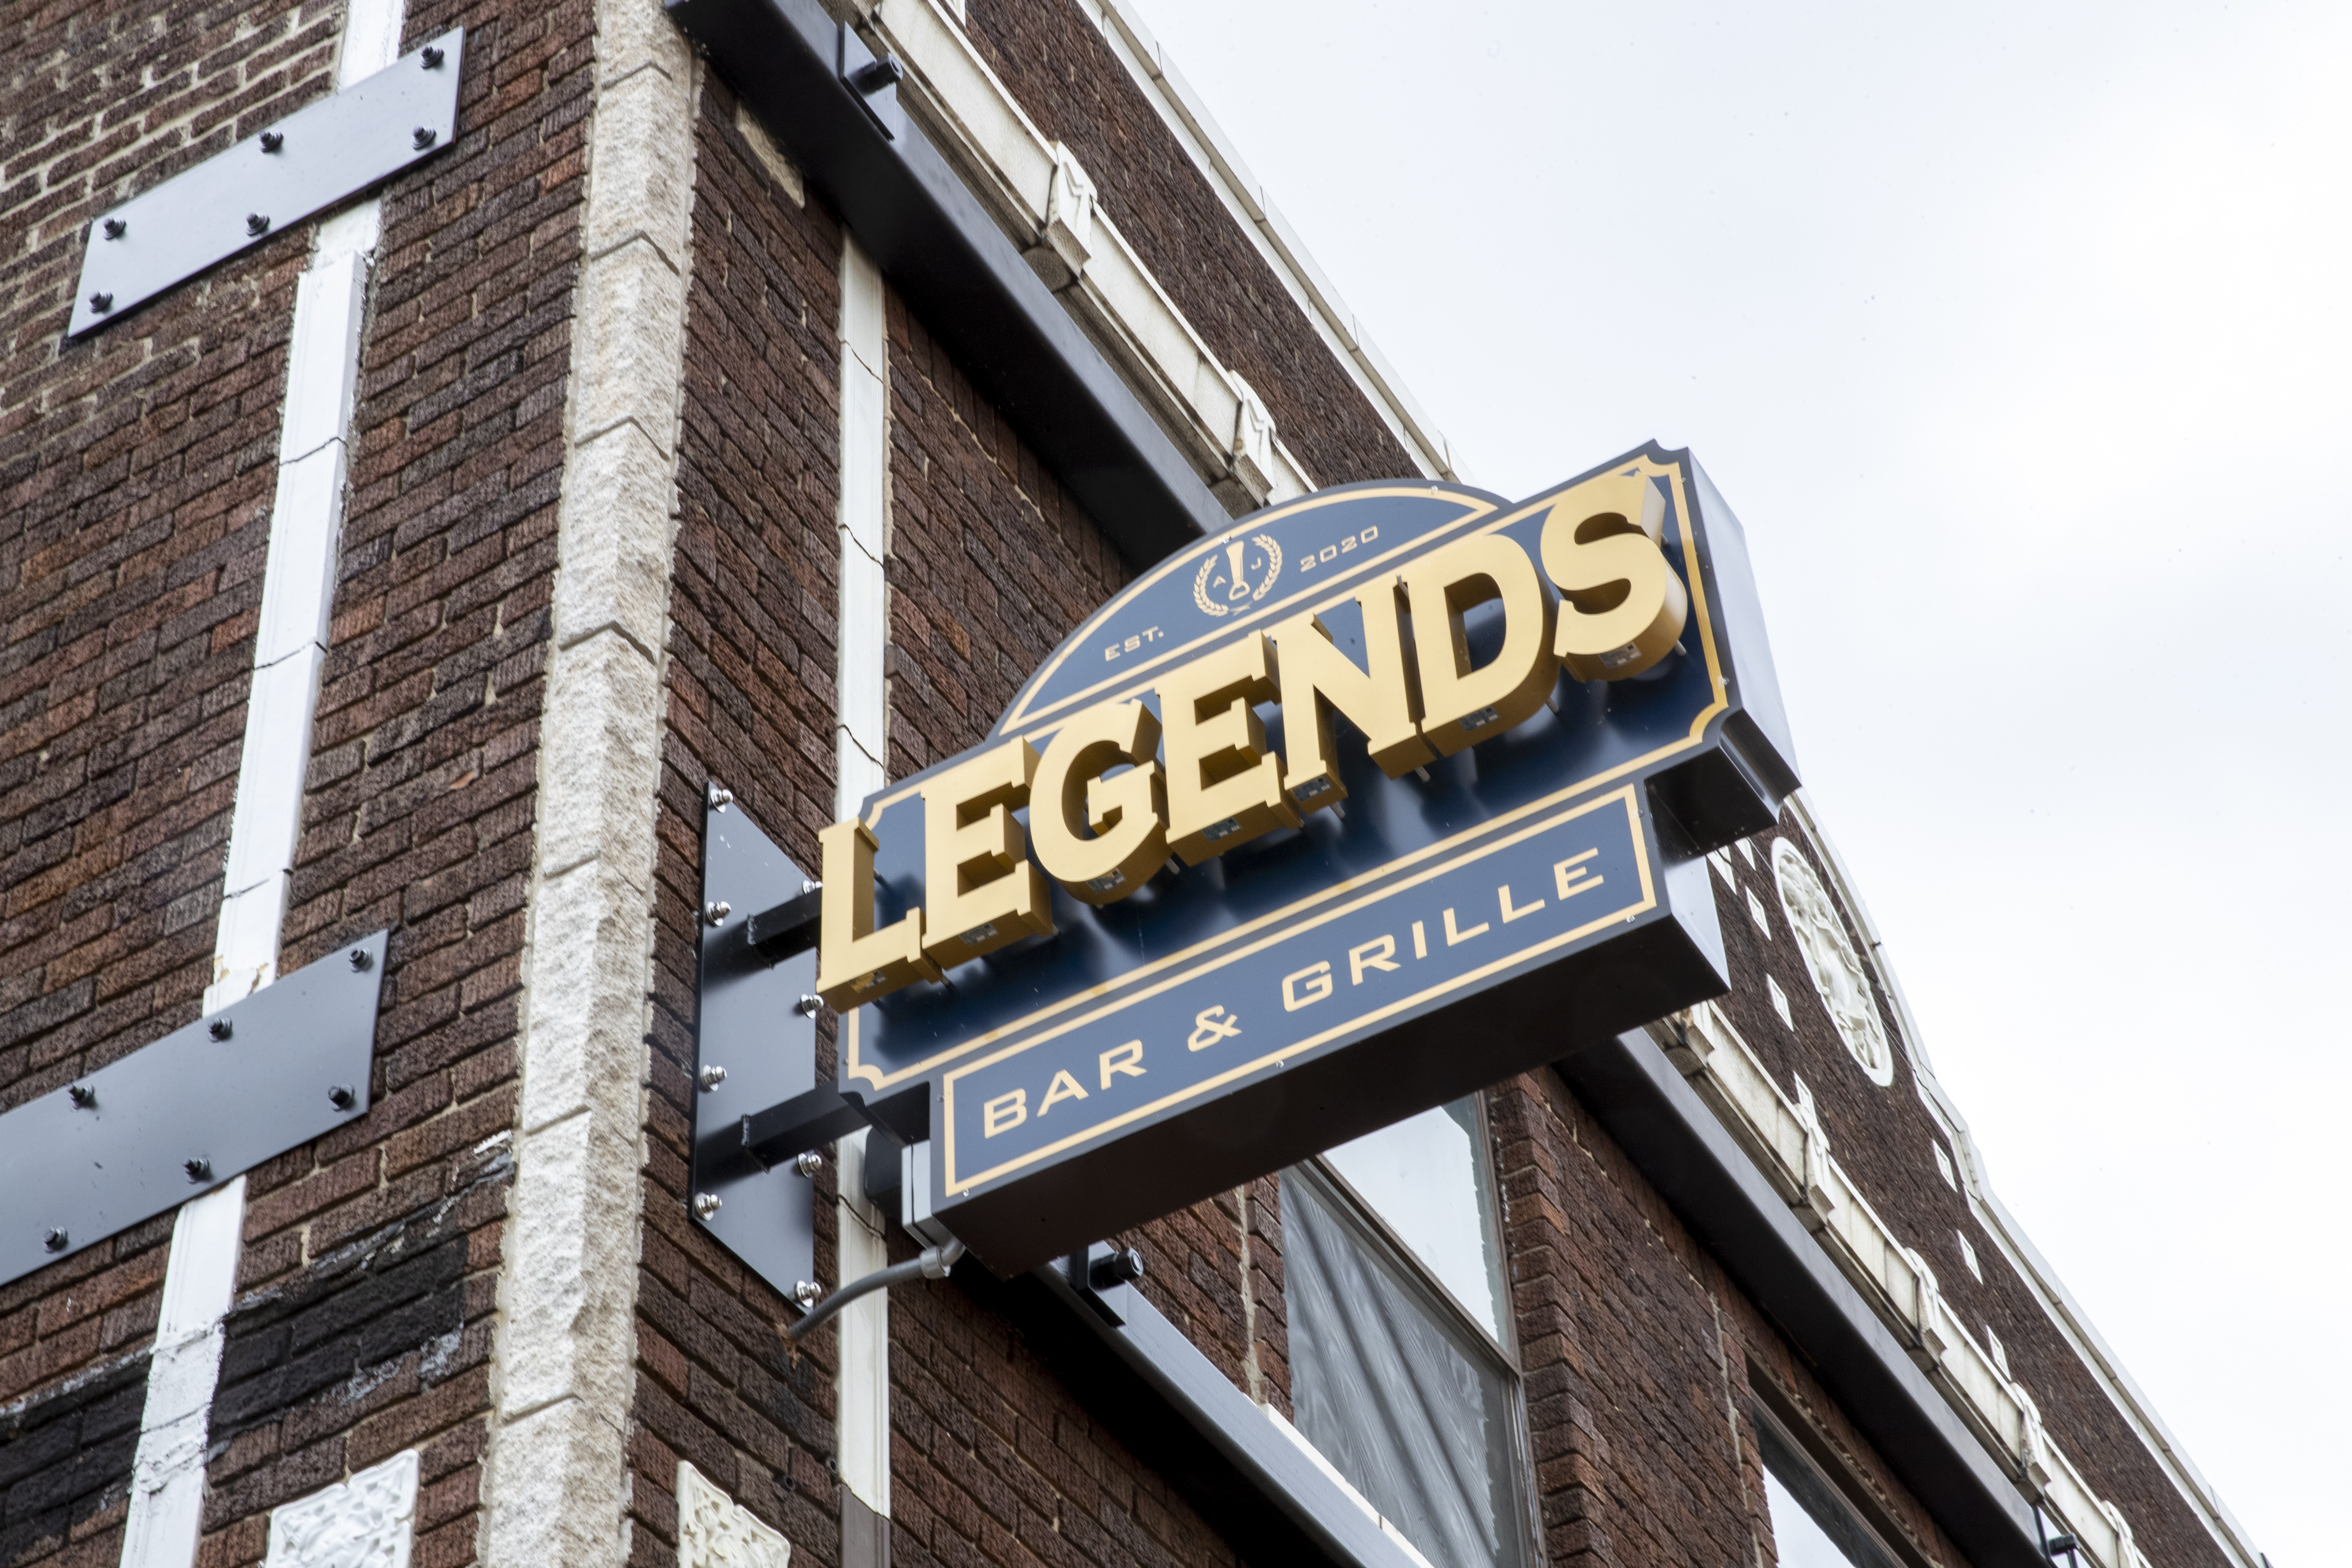 Local Eats: Legends Bar & Grille joins bustling strip in downtown Muskegon  